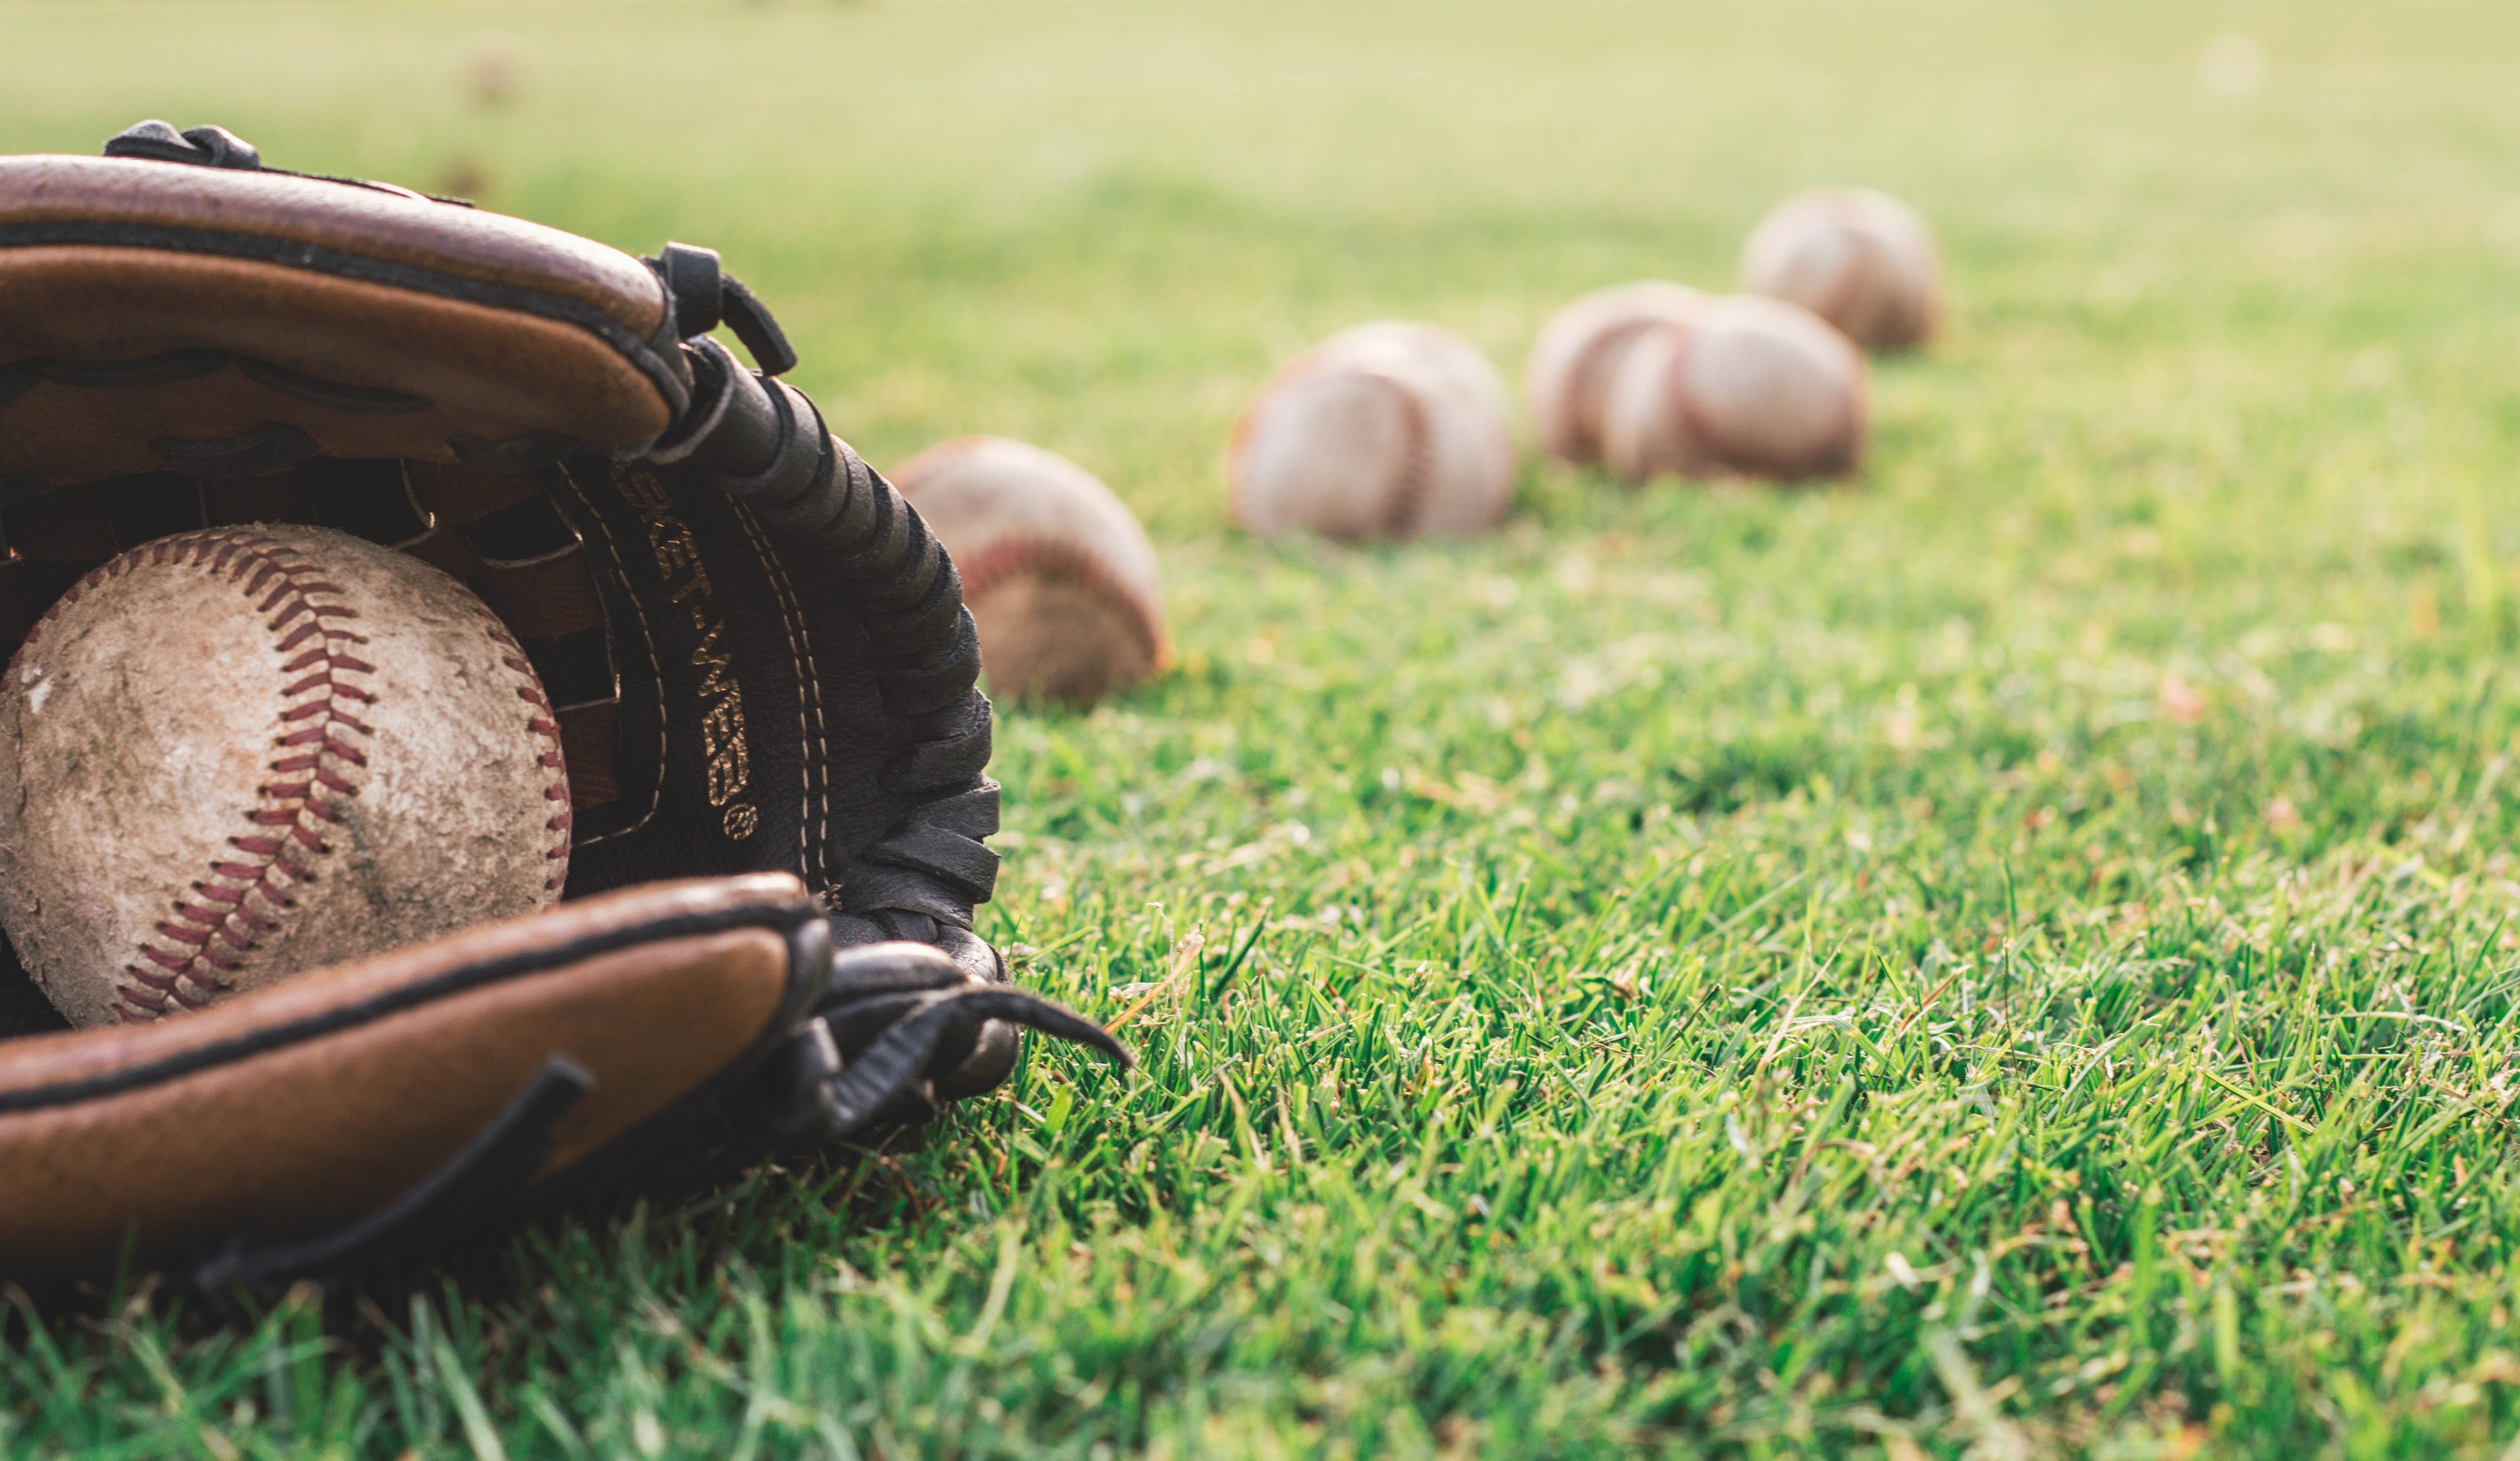 Baseball glove and balls on a field. | Source: Pexels/ Steshka Willems